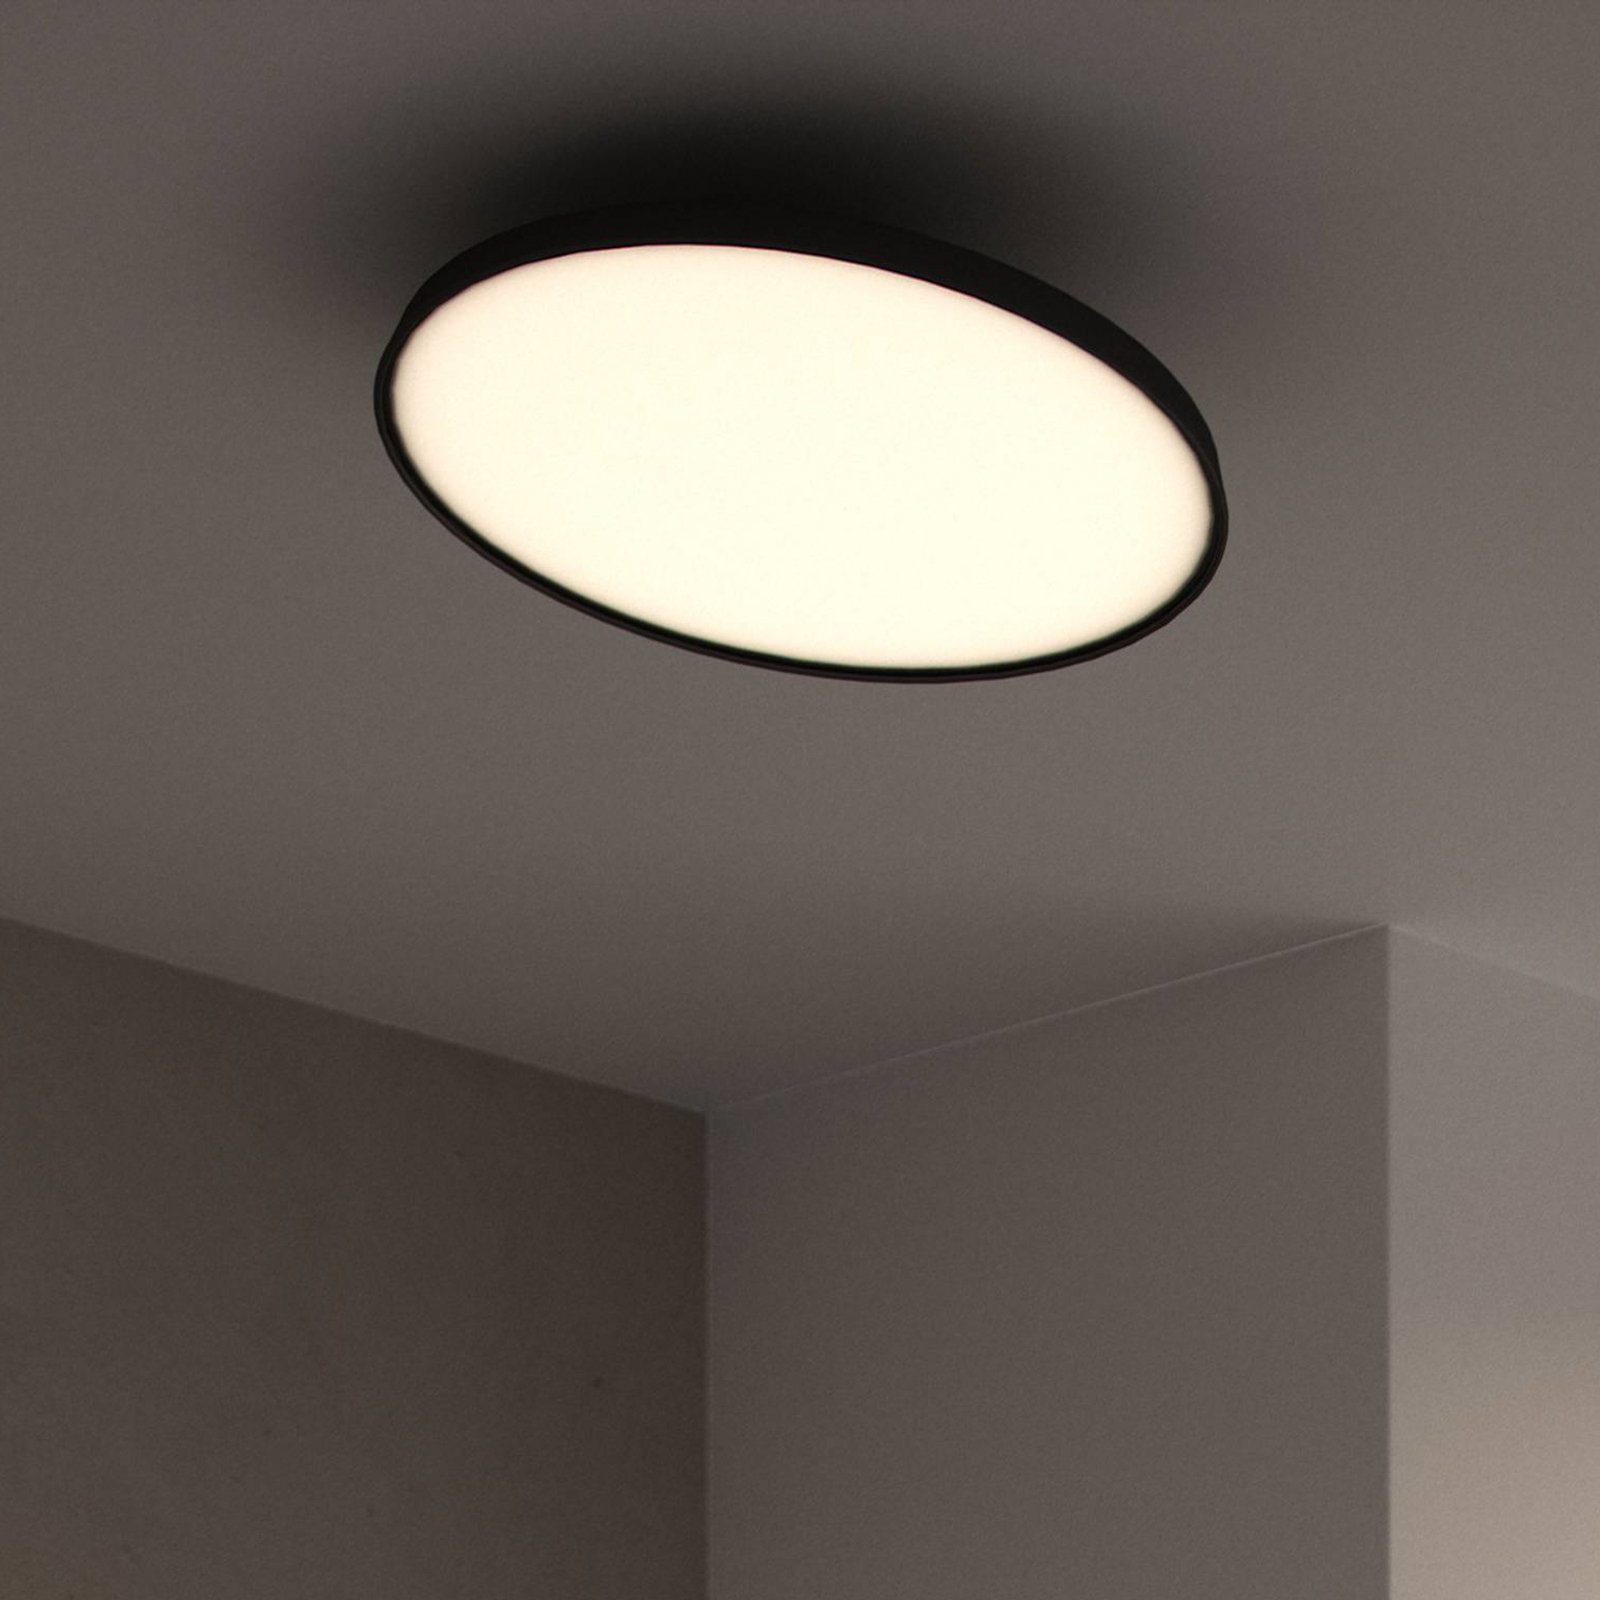 LED plafondlamp Kaito Pro, zwart, Ø 38,5 cm